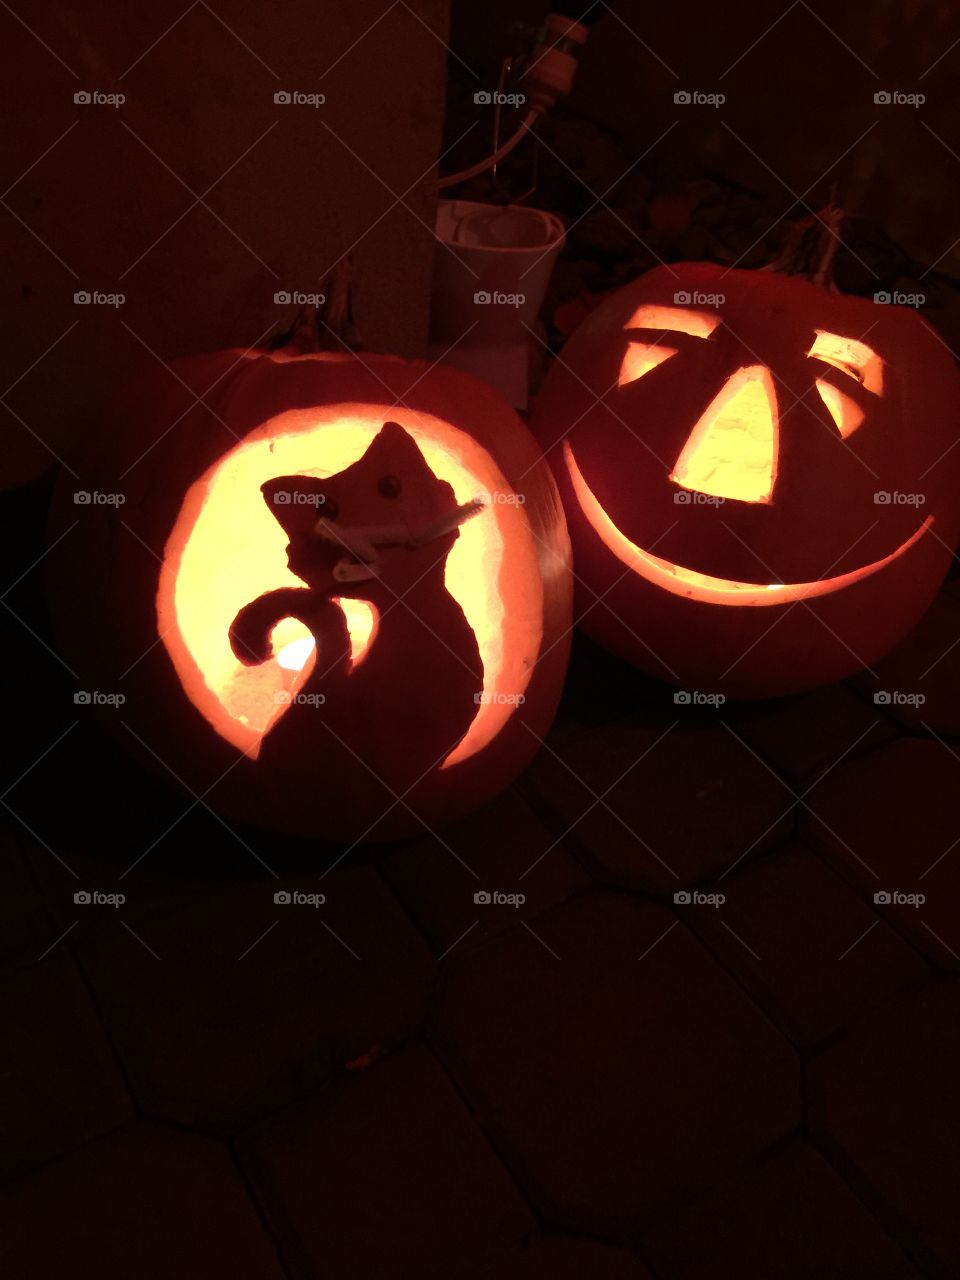 Carved Halloween pumpkins